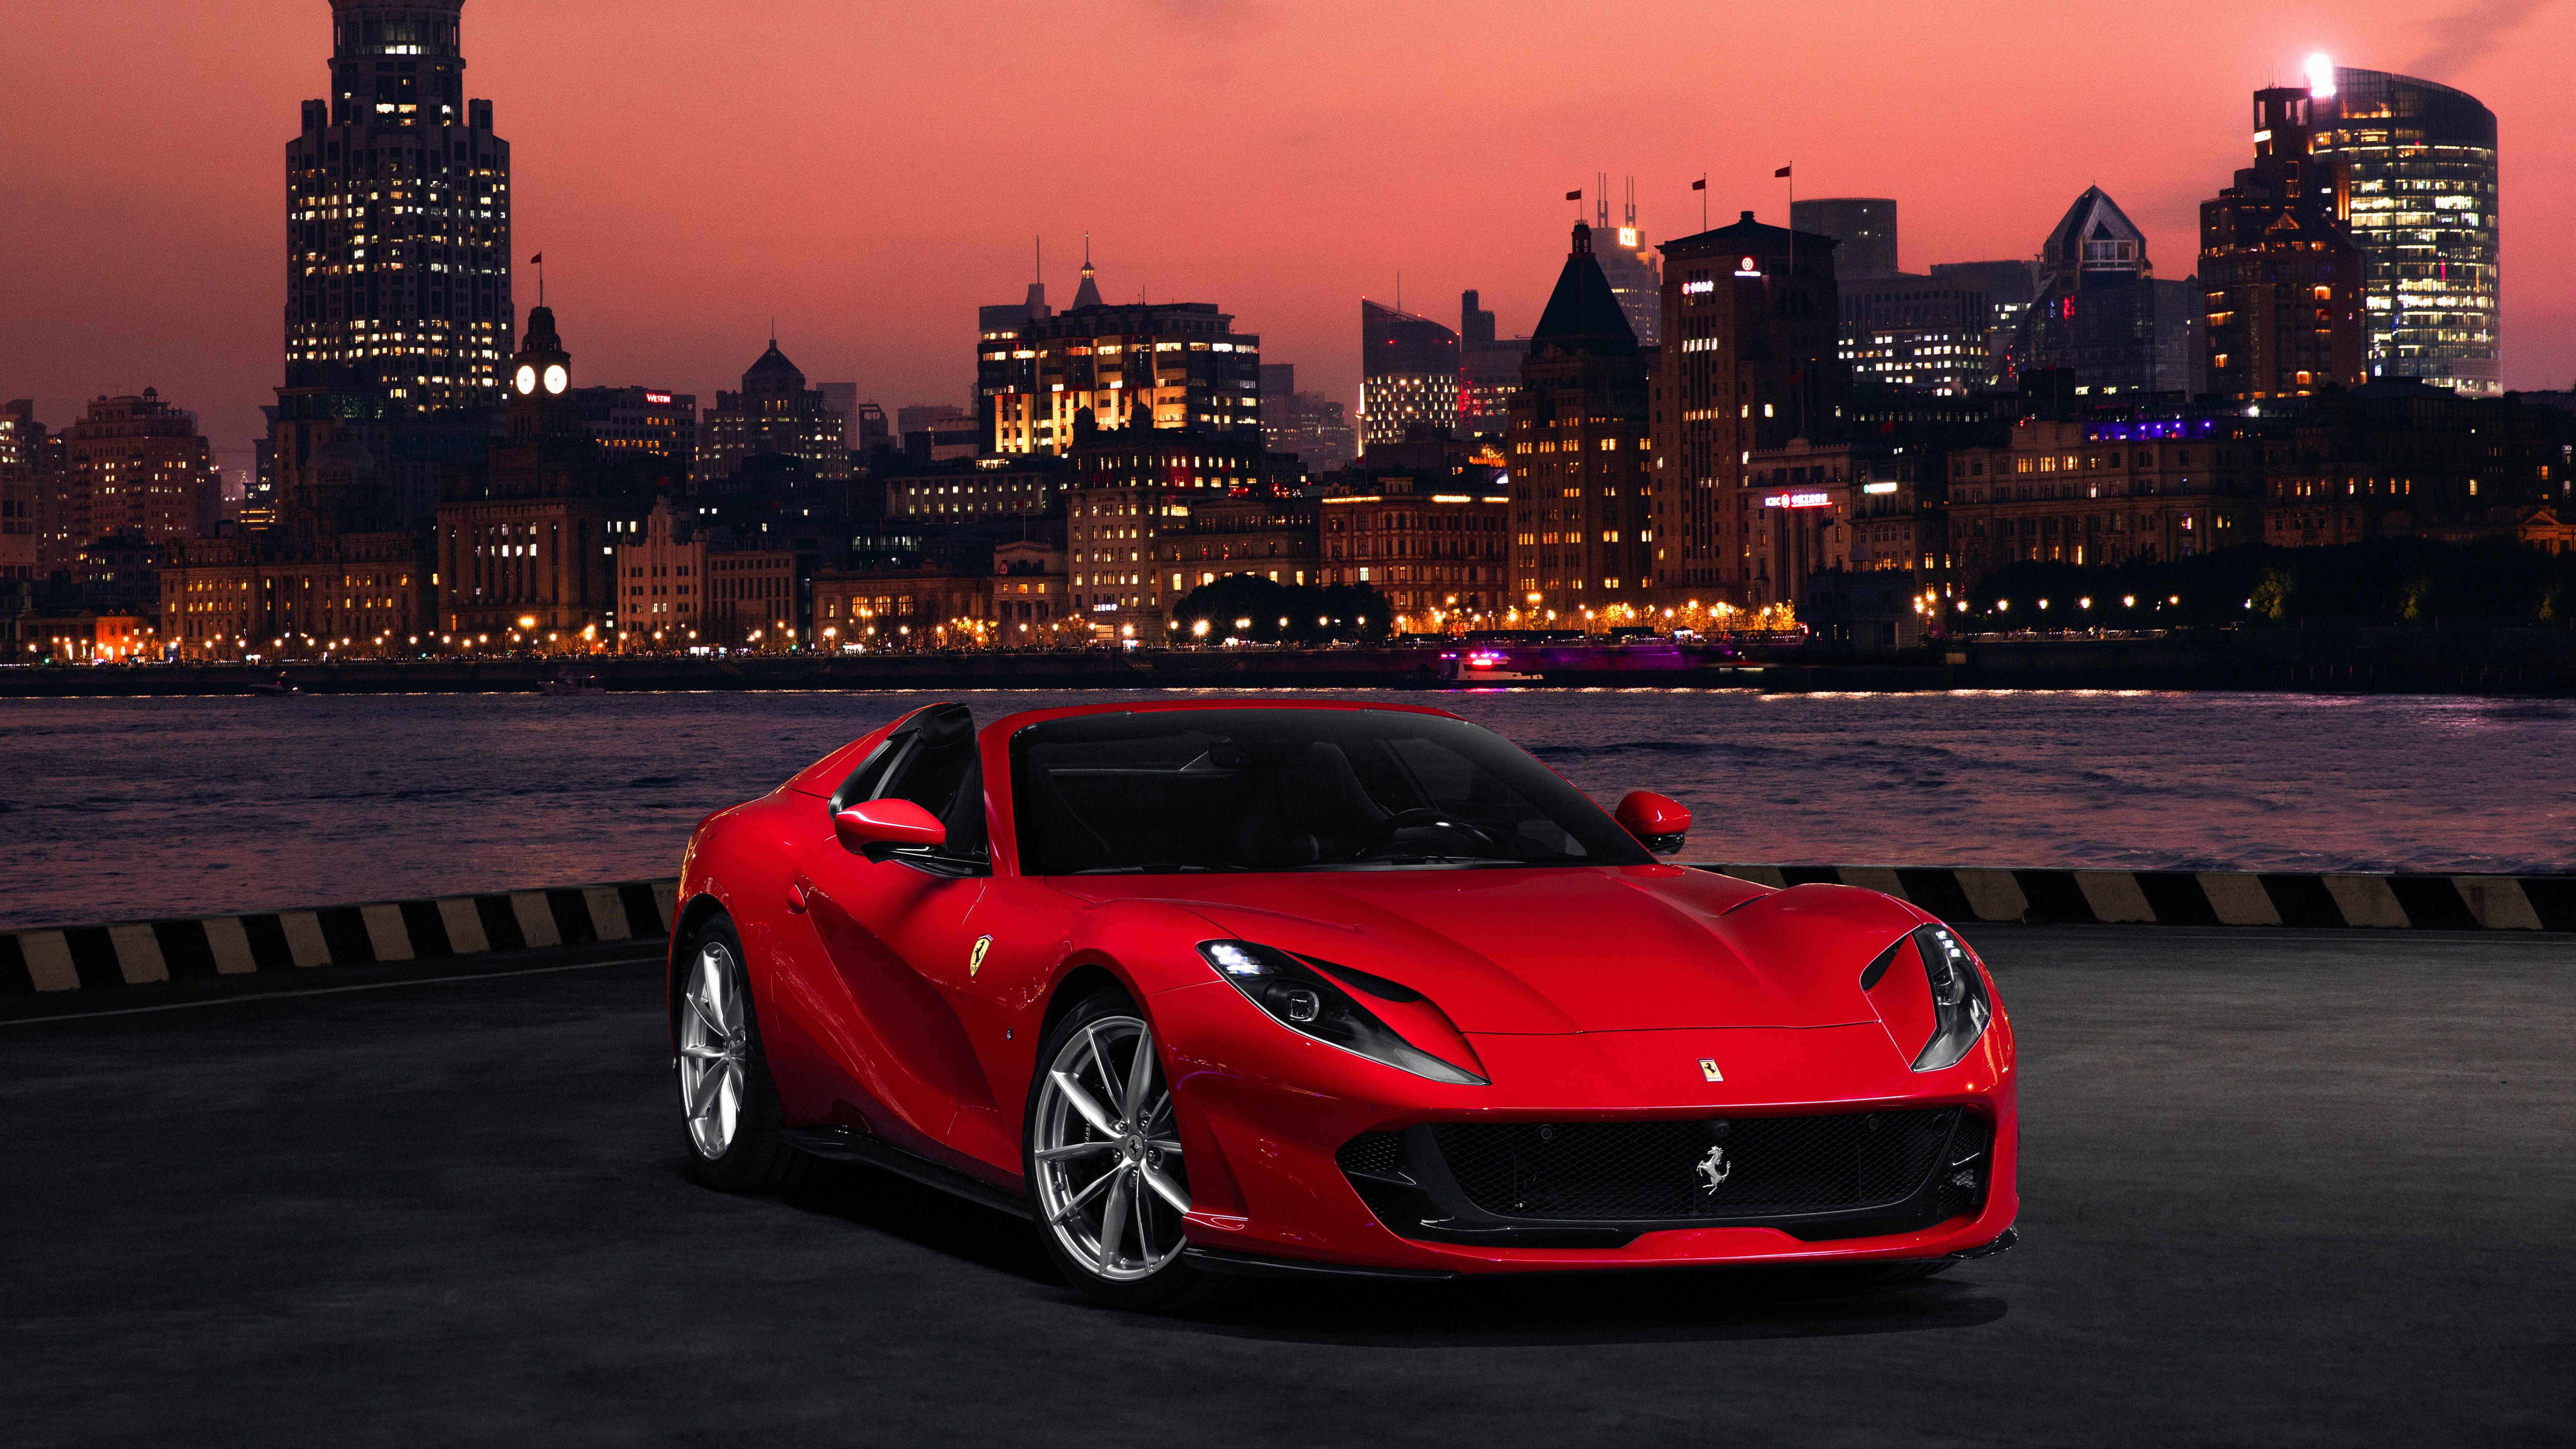 Red Ferrari Super Luxury Car 4K wallpaper download